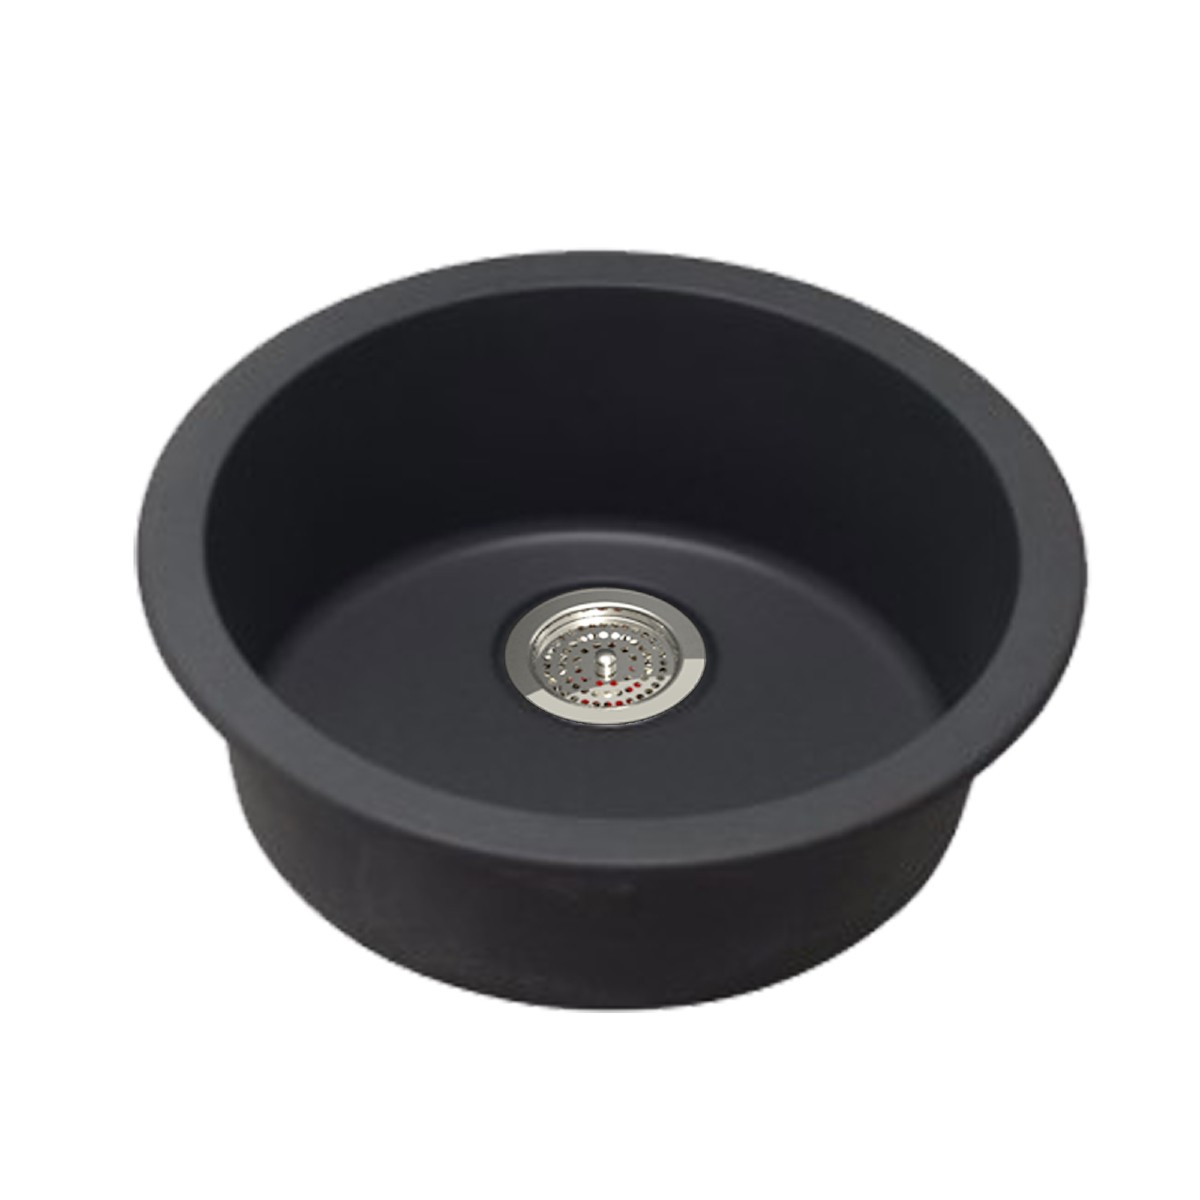 Granite Kitchen Sink Round Black Single Bowl